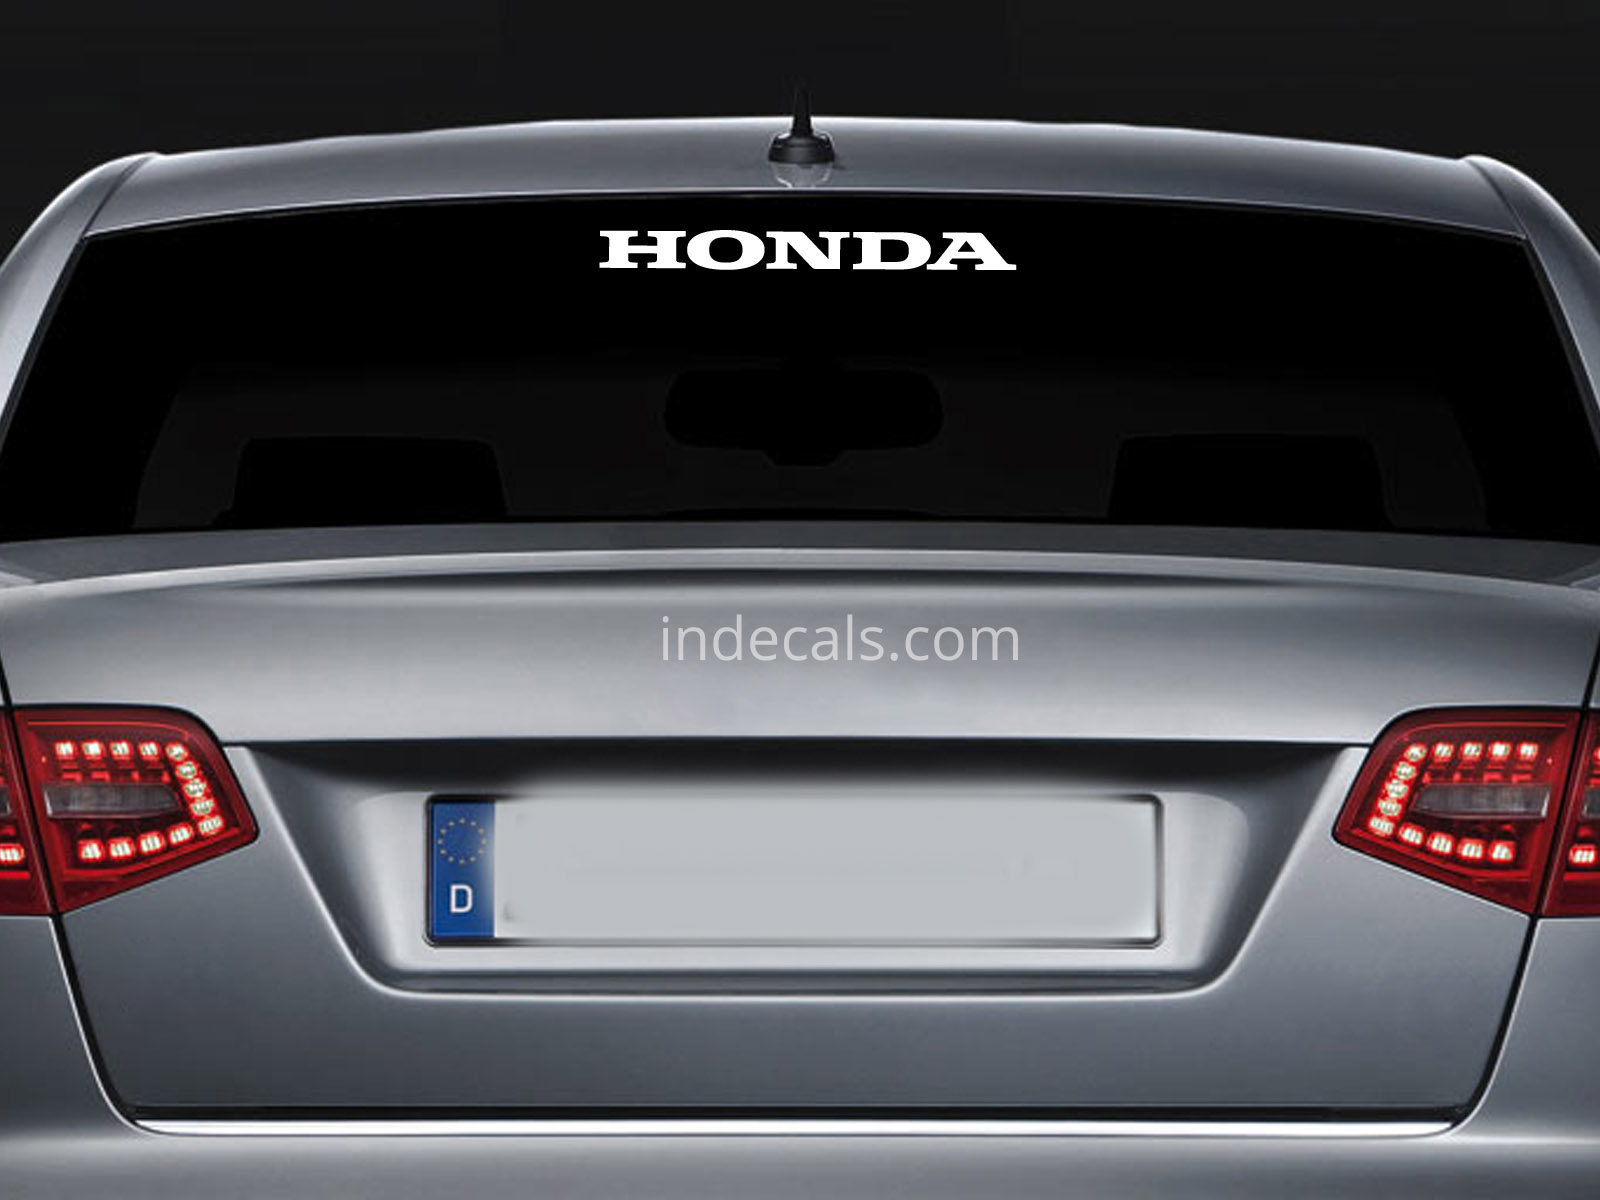 1 x Honda Sticker for Windshield or Back Window - White